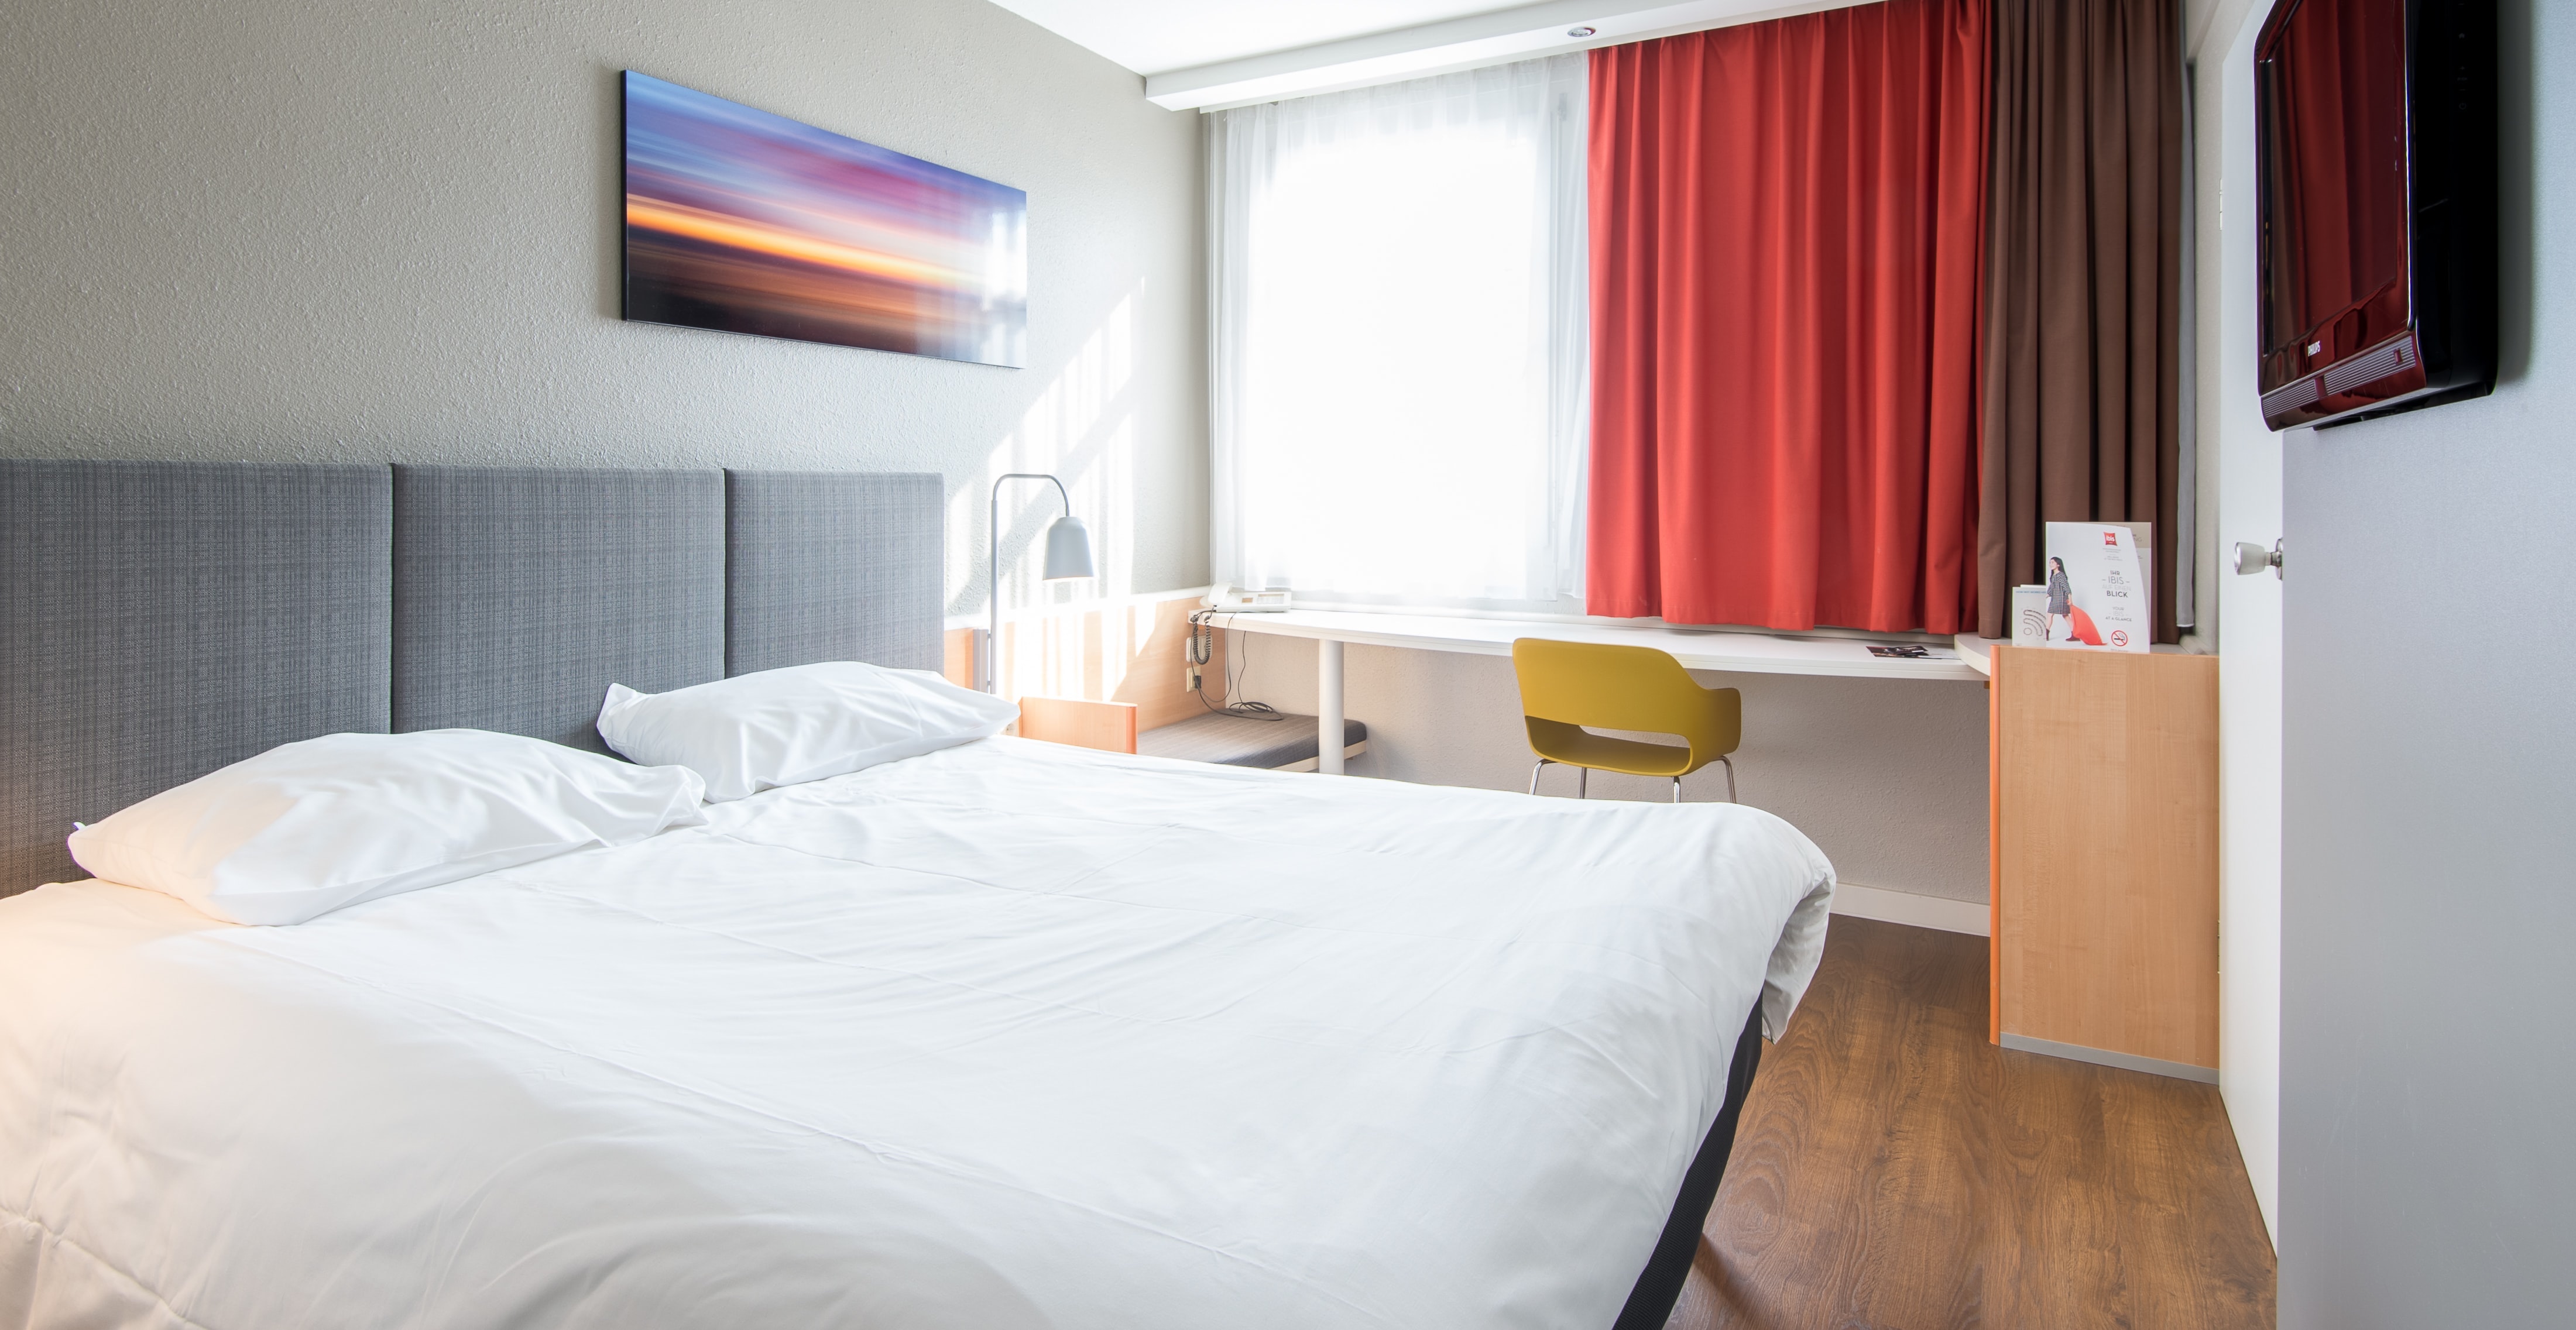 Verborgen camera in Airbnb of hotelkamer? Zo vind je ze foto